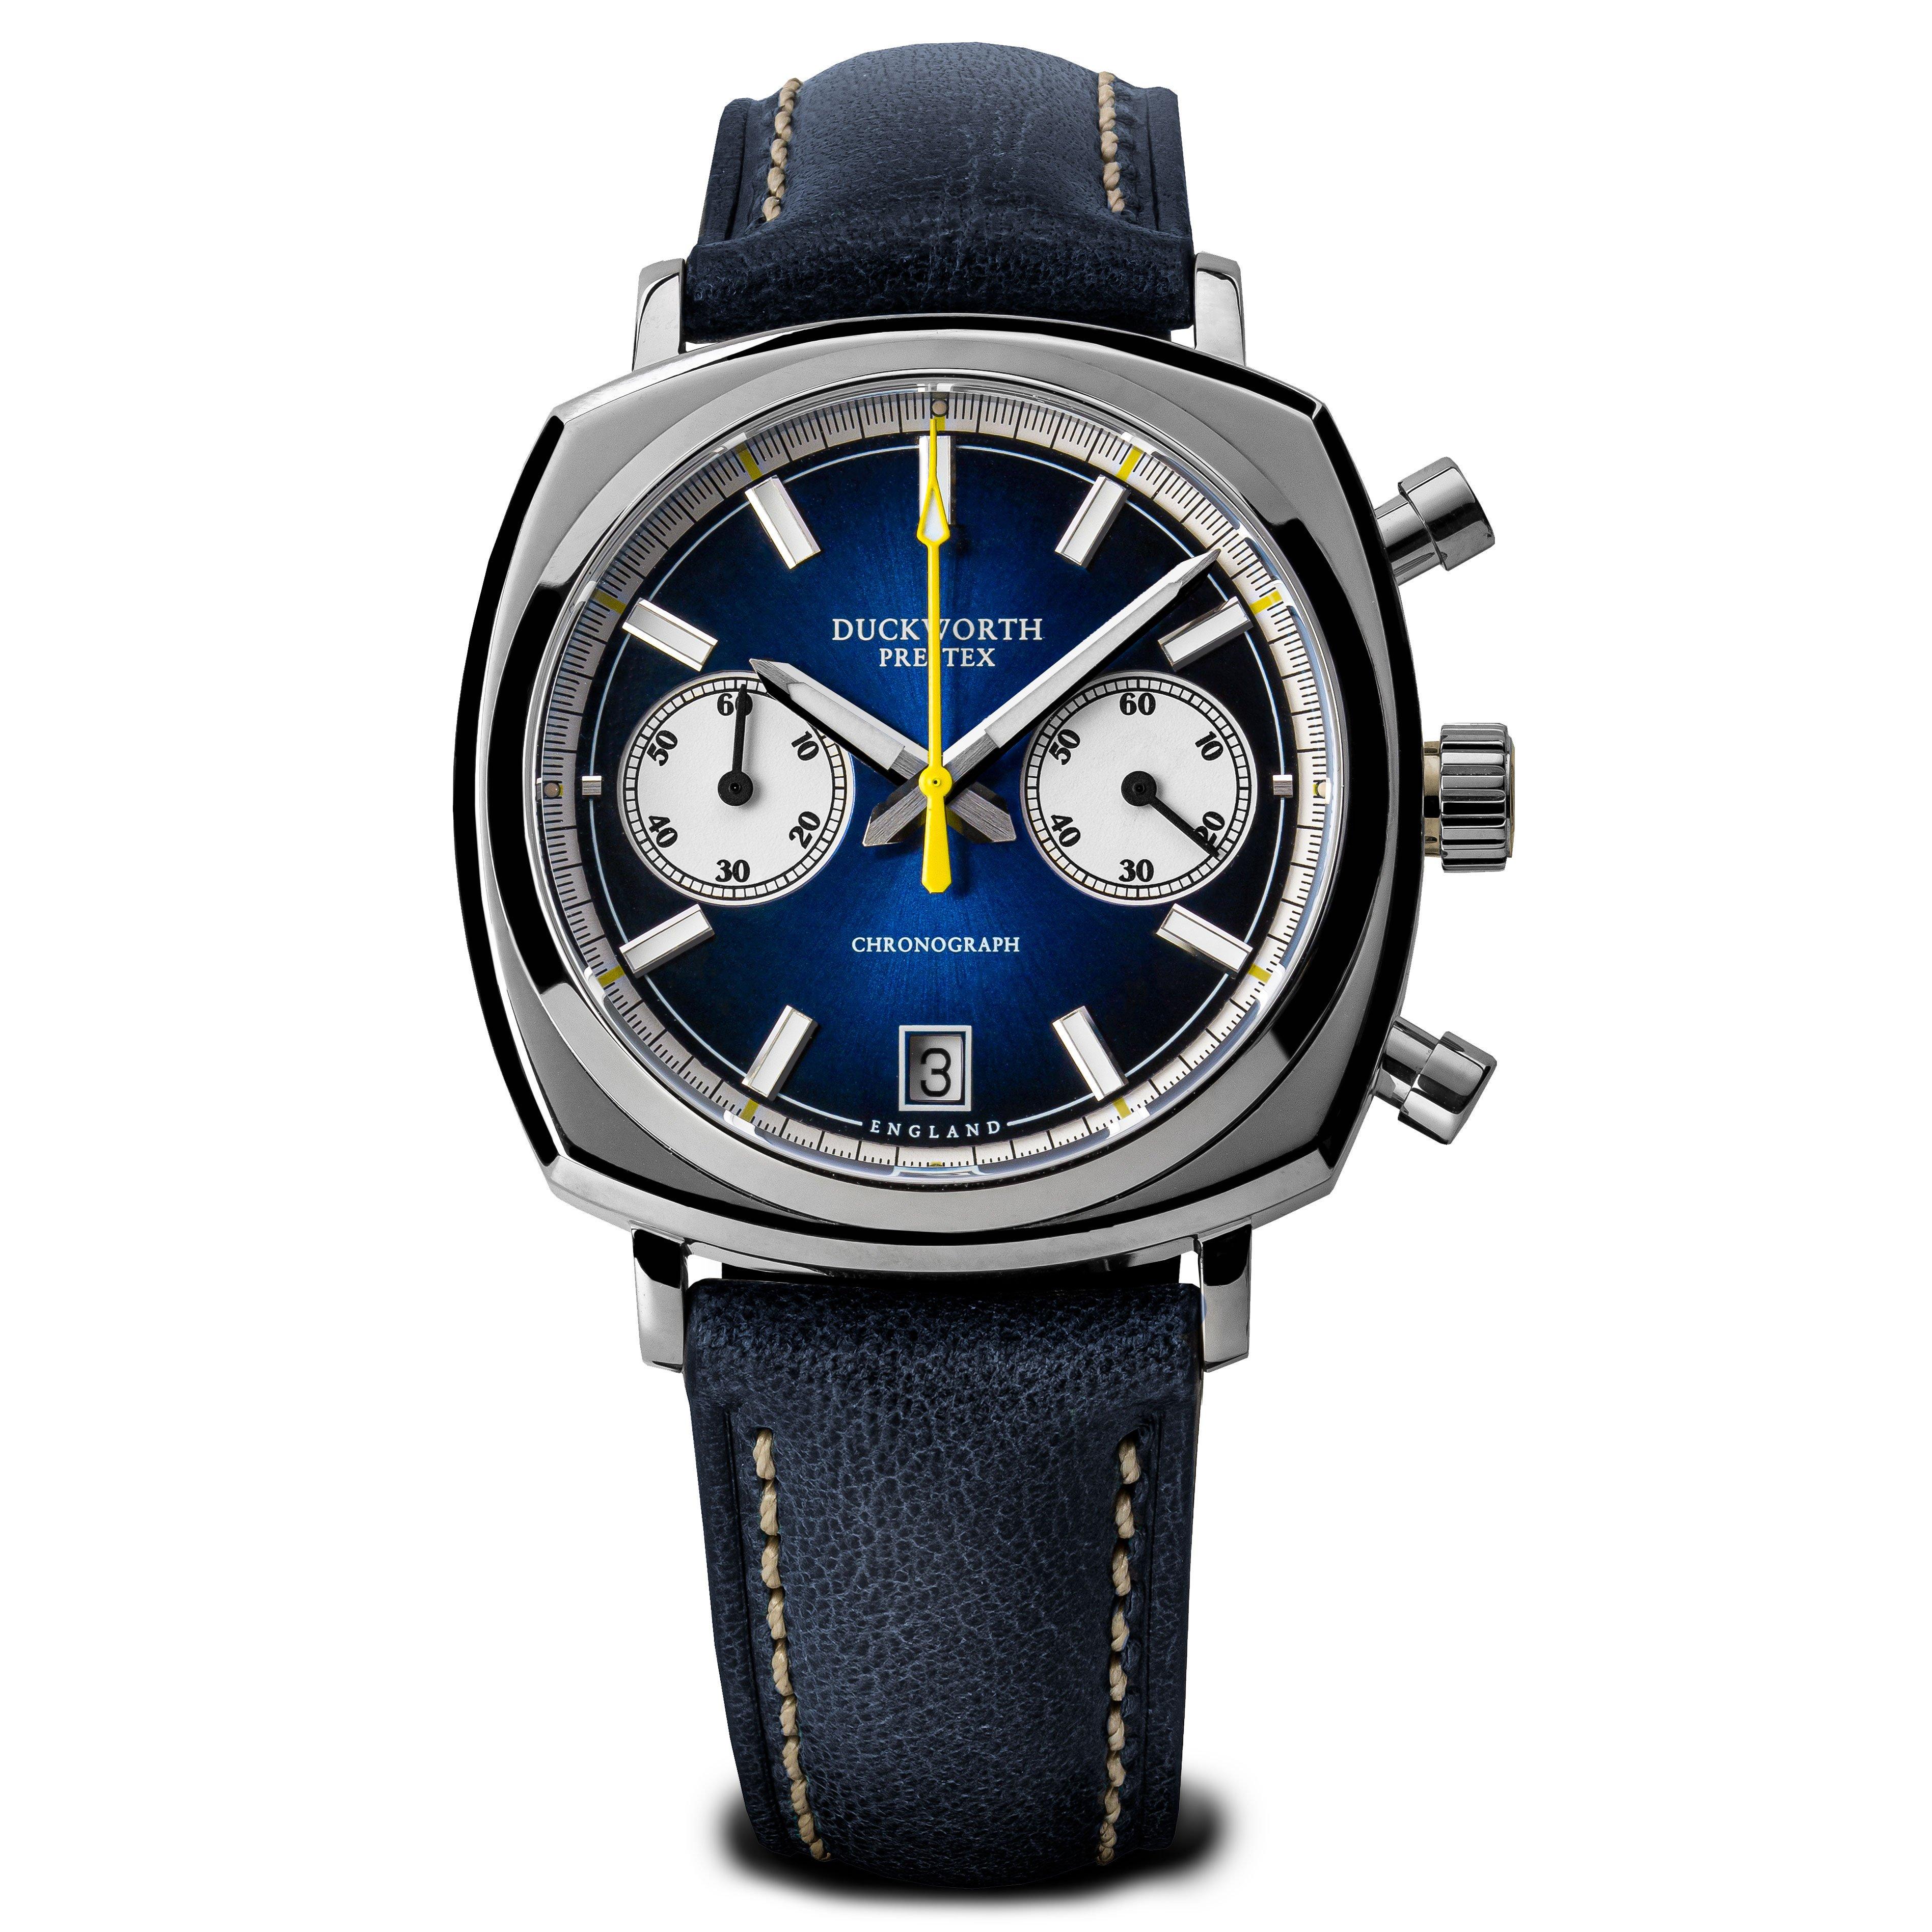 duckworth prestex chronograph men's watch